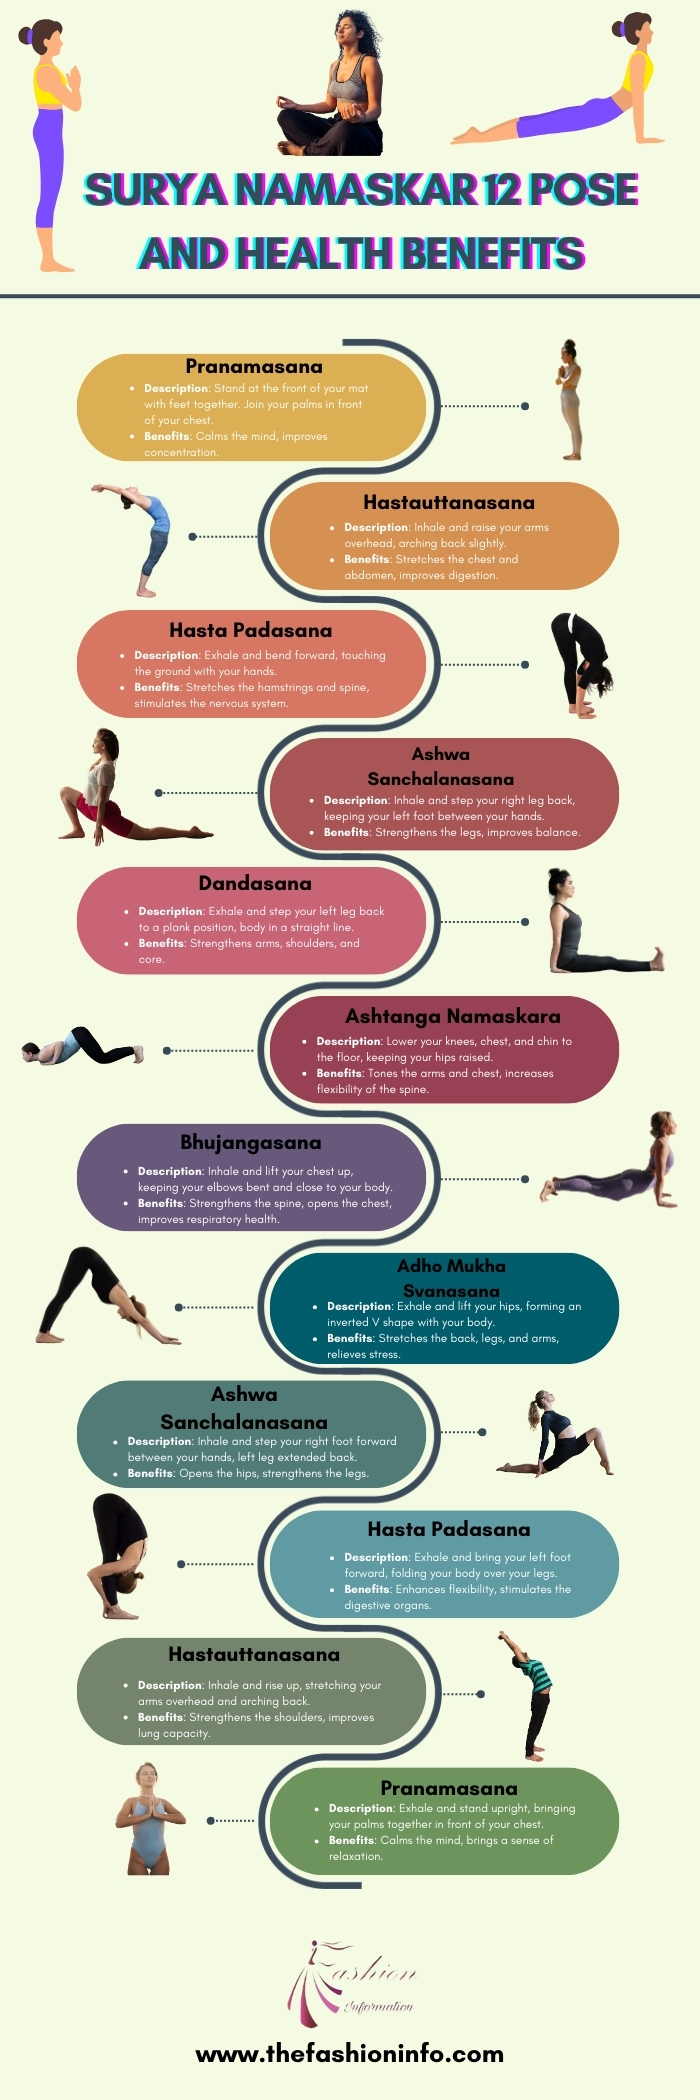 Surya Namaskar 12 Pose and Health Benefits